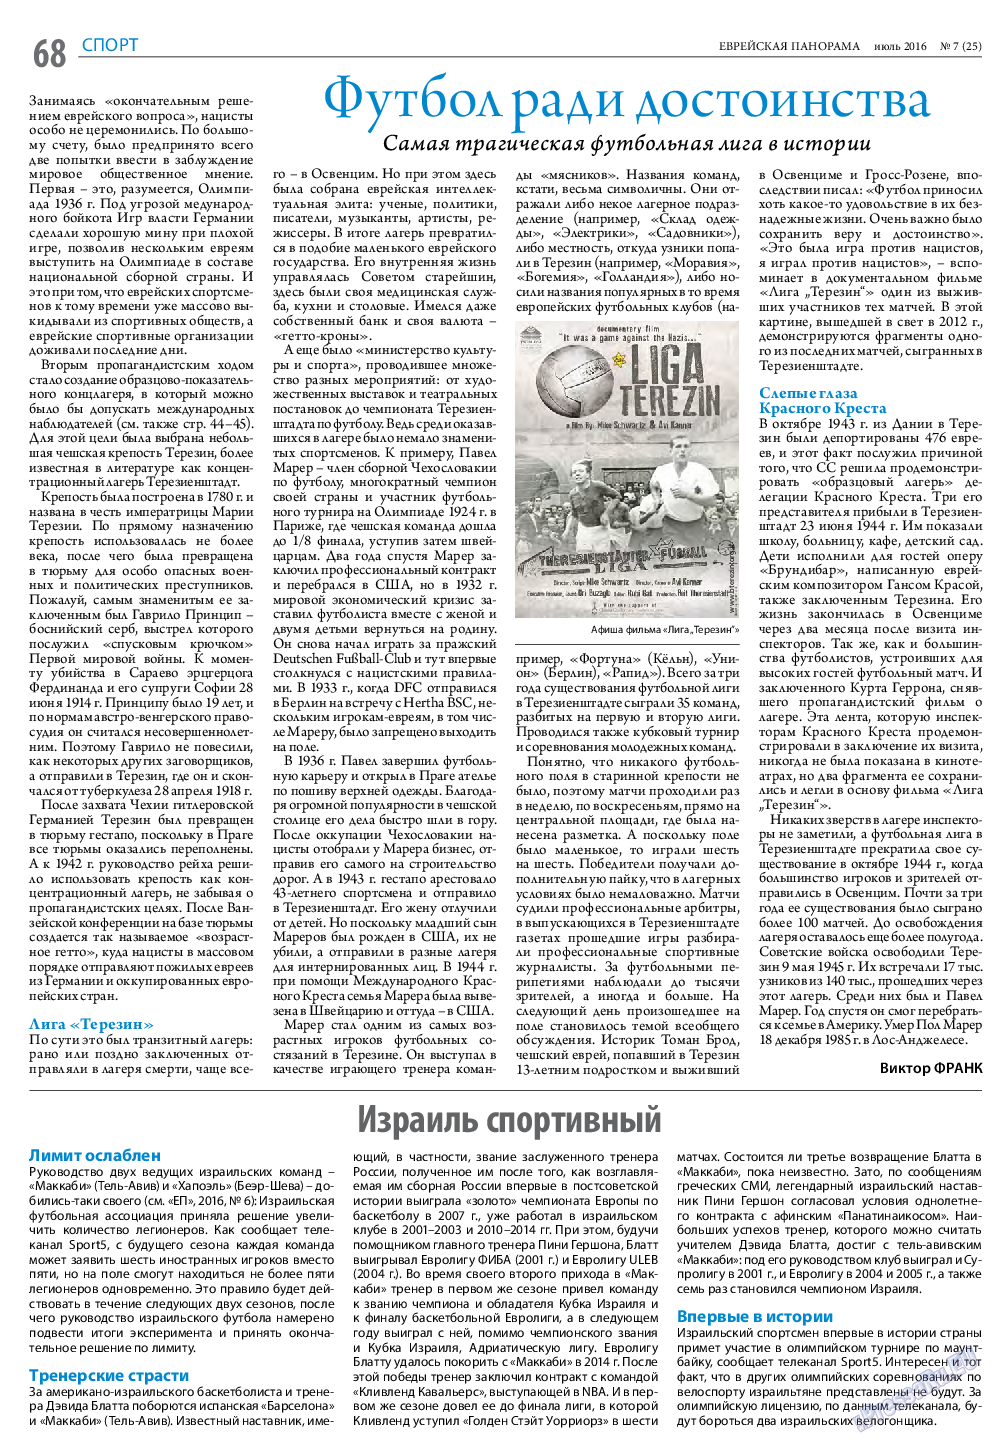 Еврейская панорама, газета. 2016 №7 стр.68